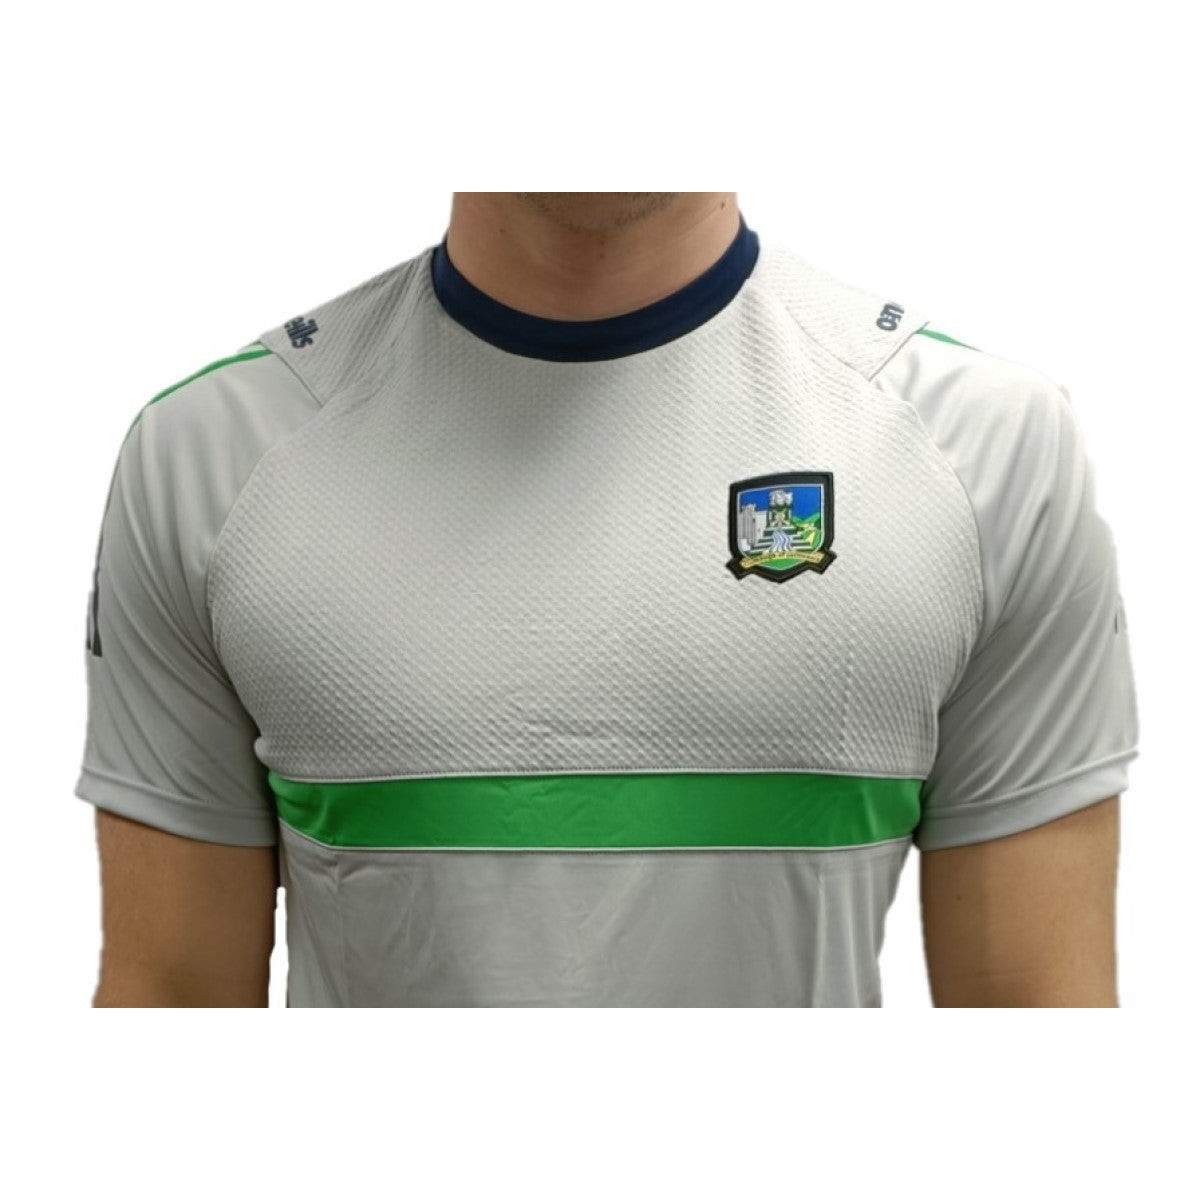 O'Neills Limerick GAA Peak T-Shirt 060 Men's (Silver Emerald Marine)